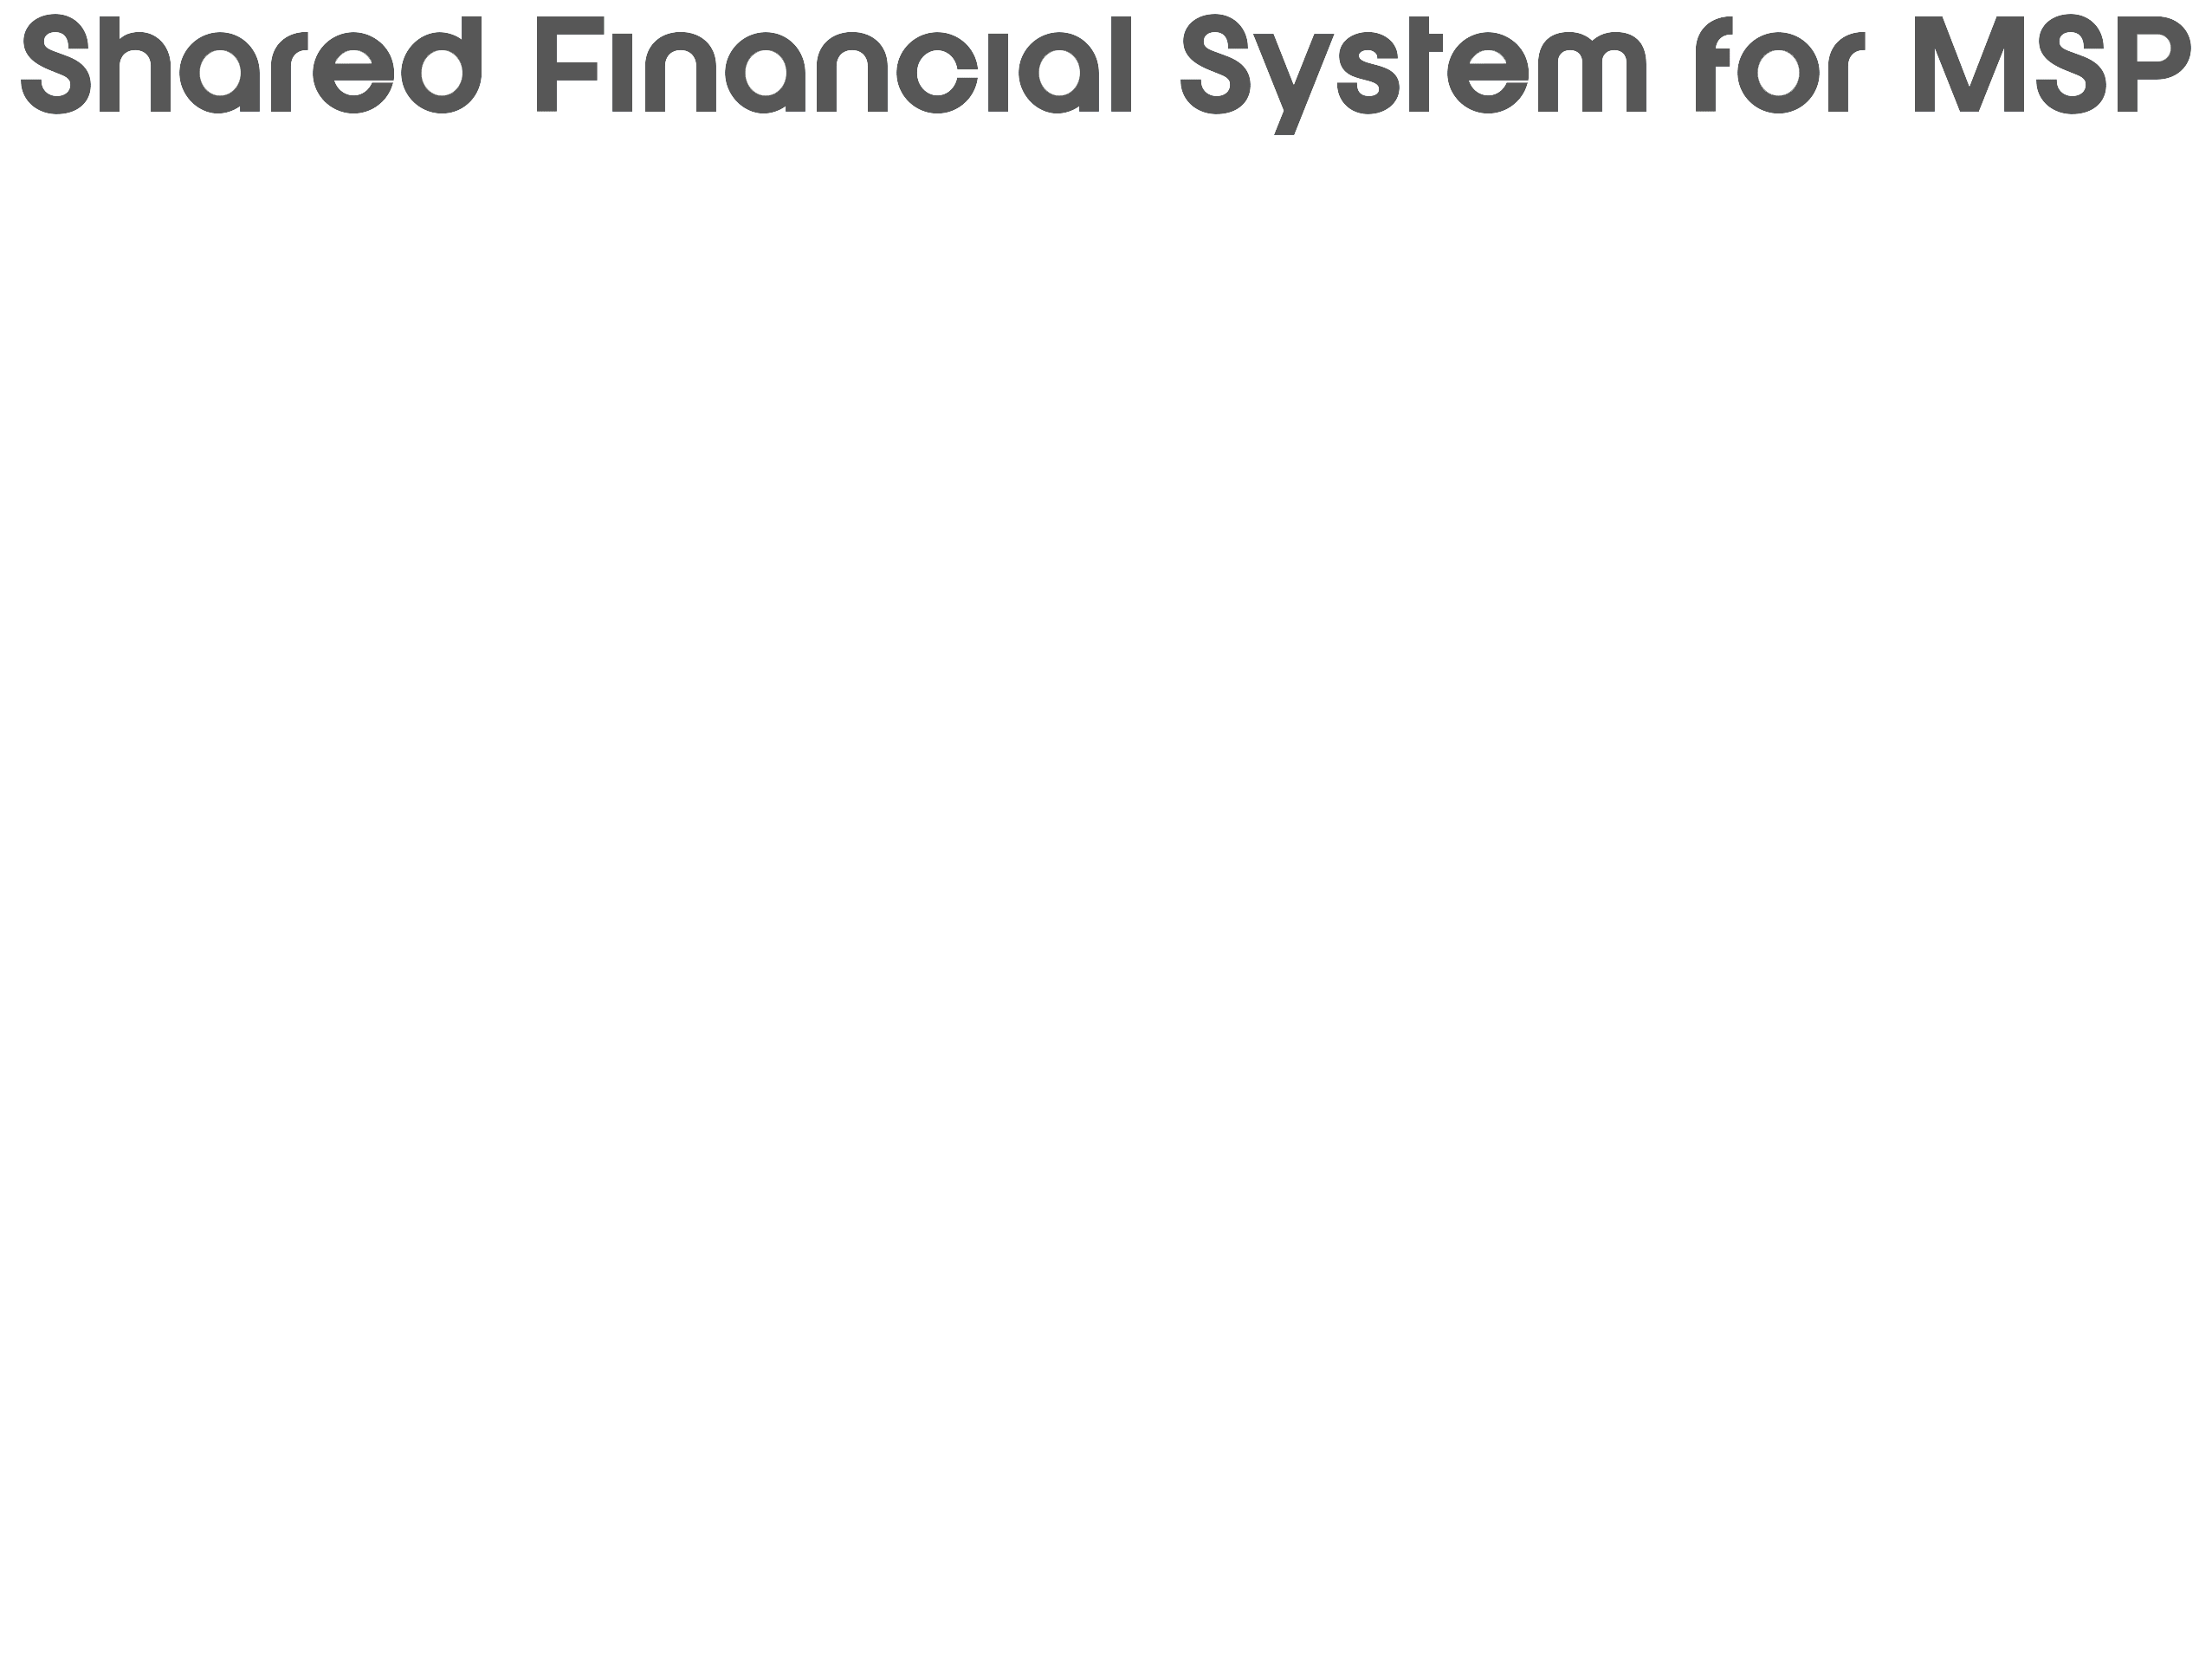 GroundBreak Shared Financial System for MSP